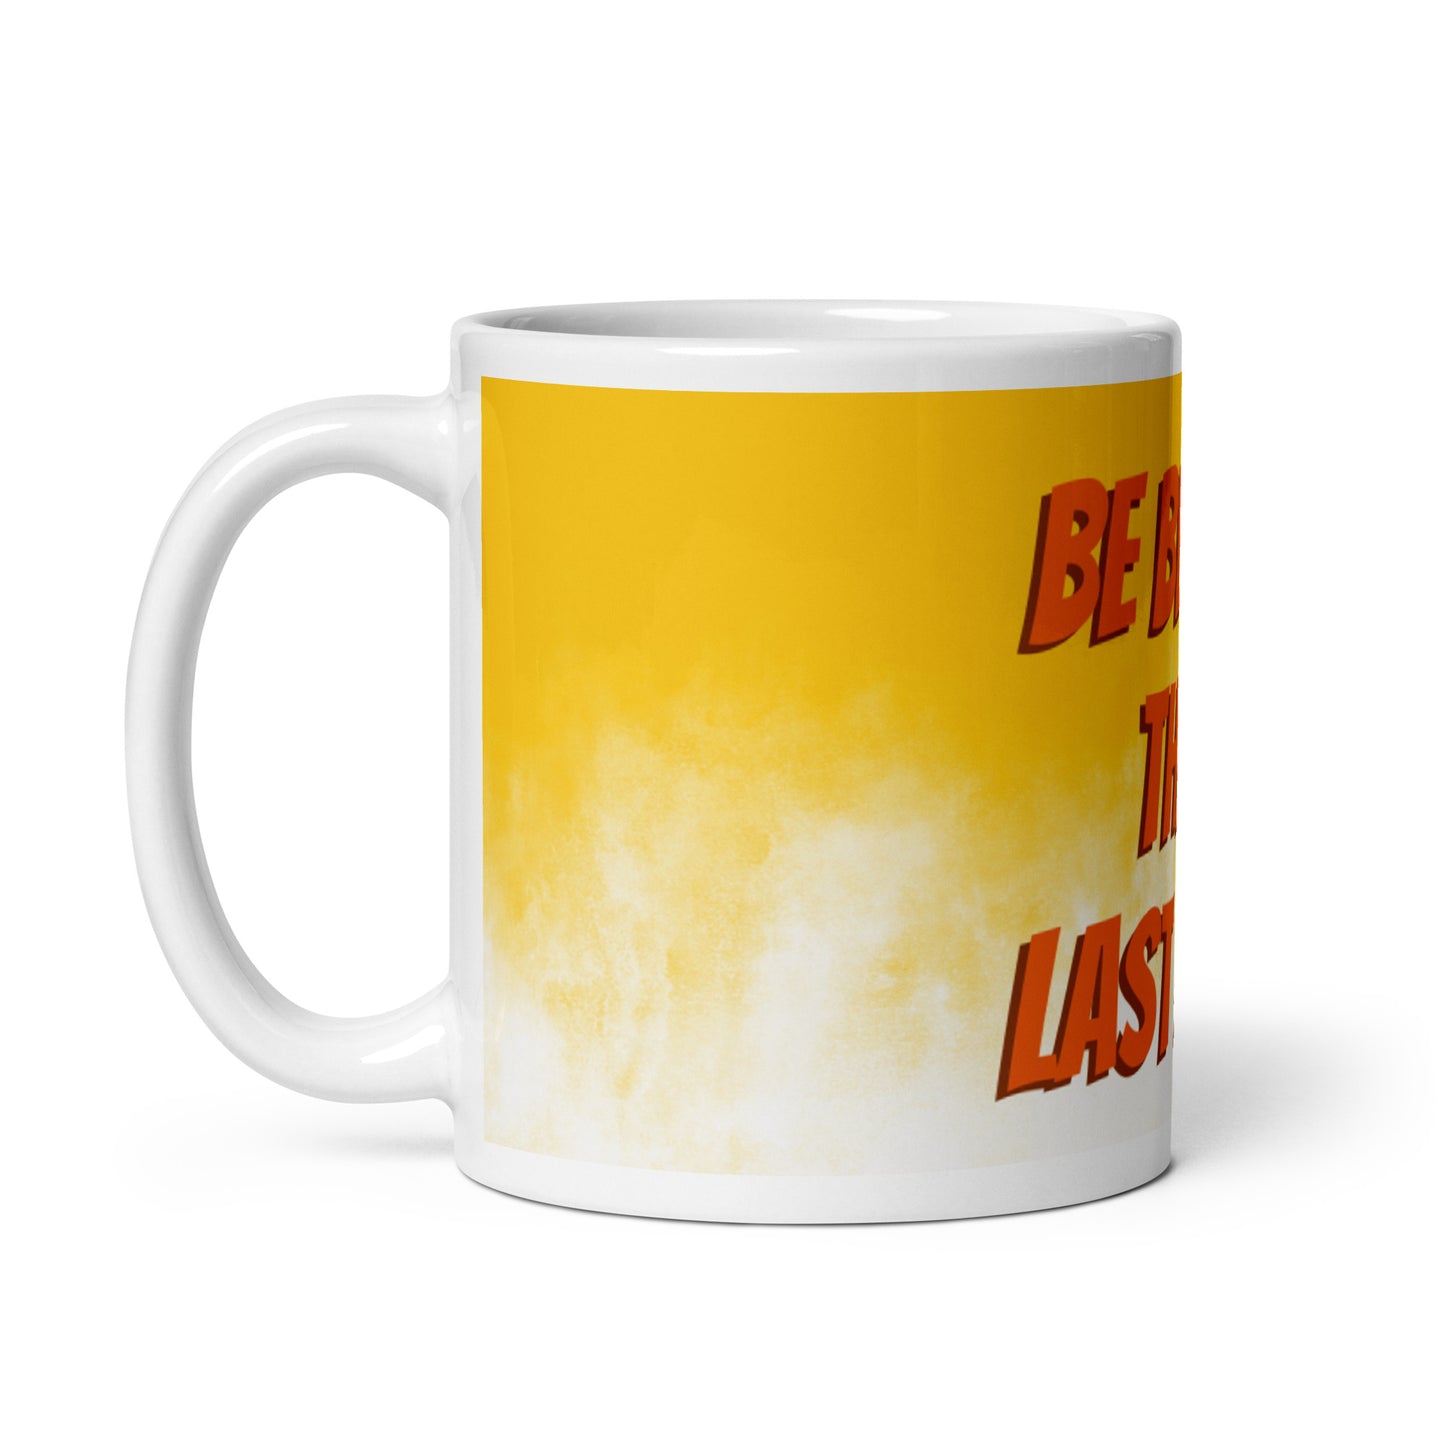 Sunny Day White Glossy Mug - Be better than last week